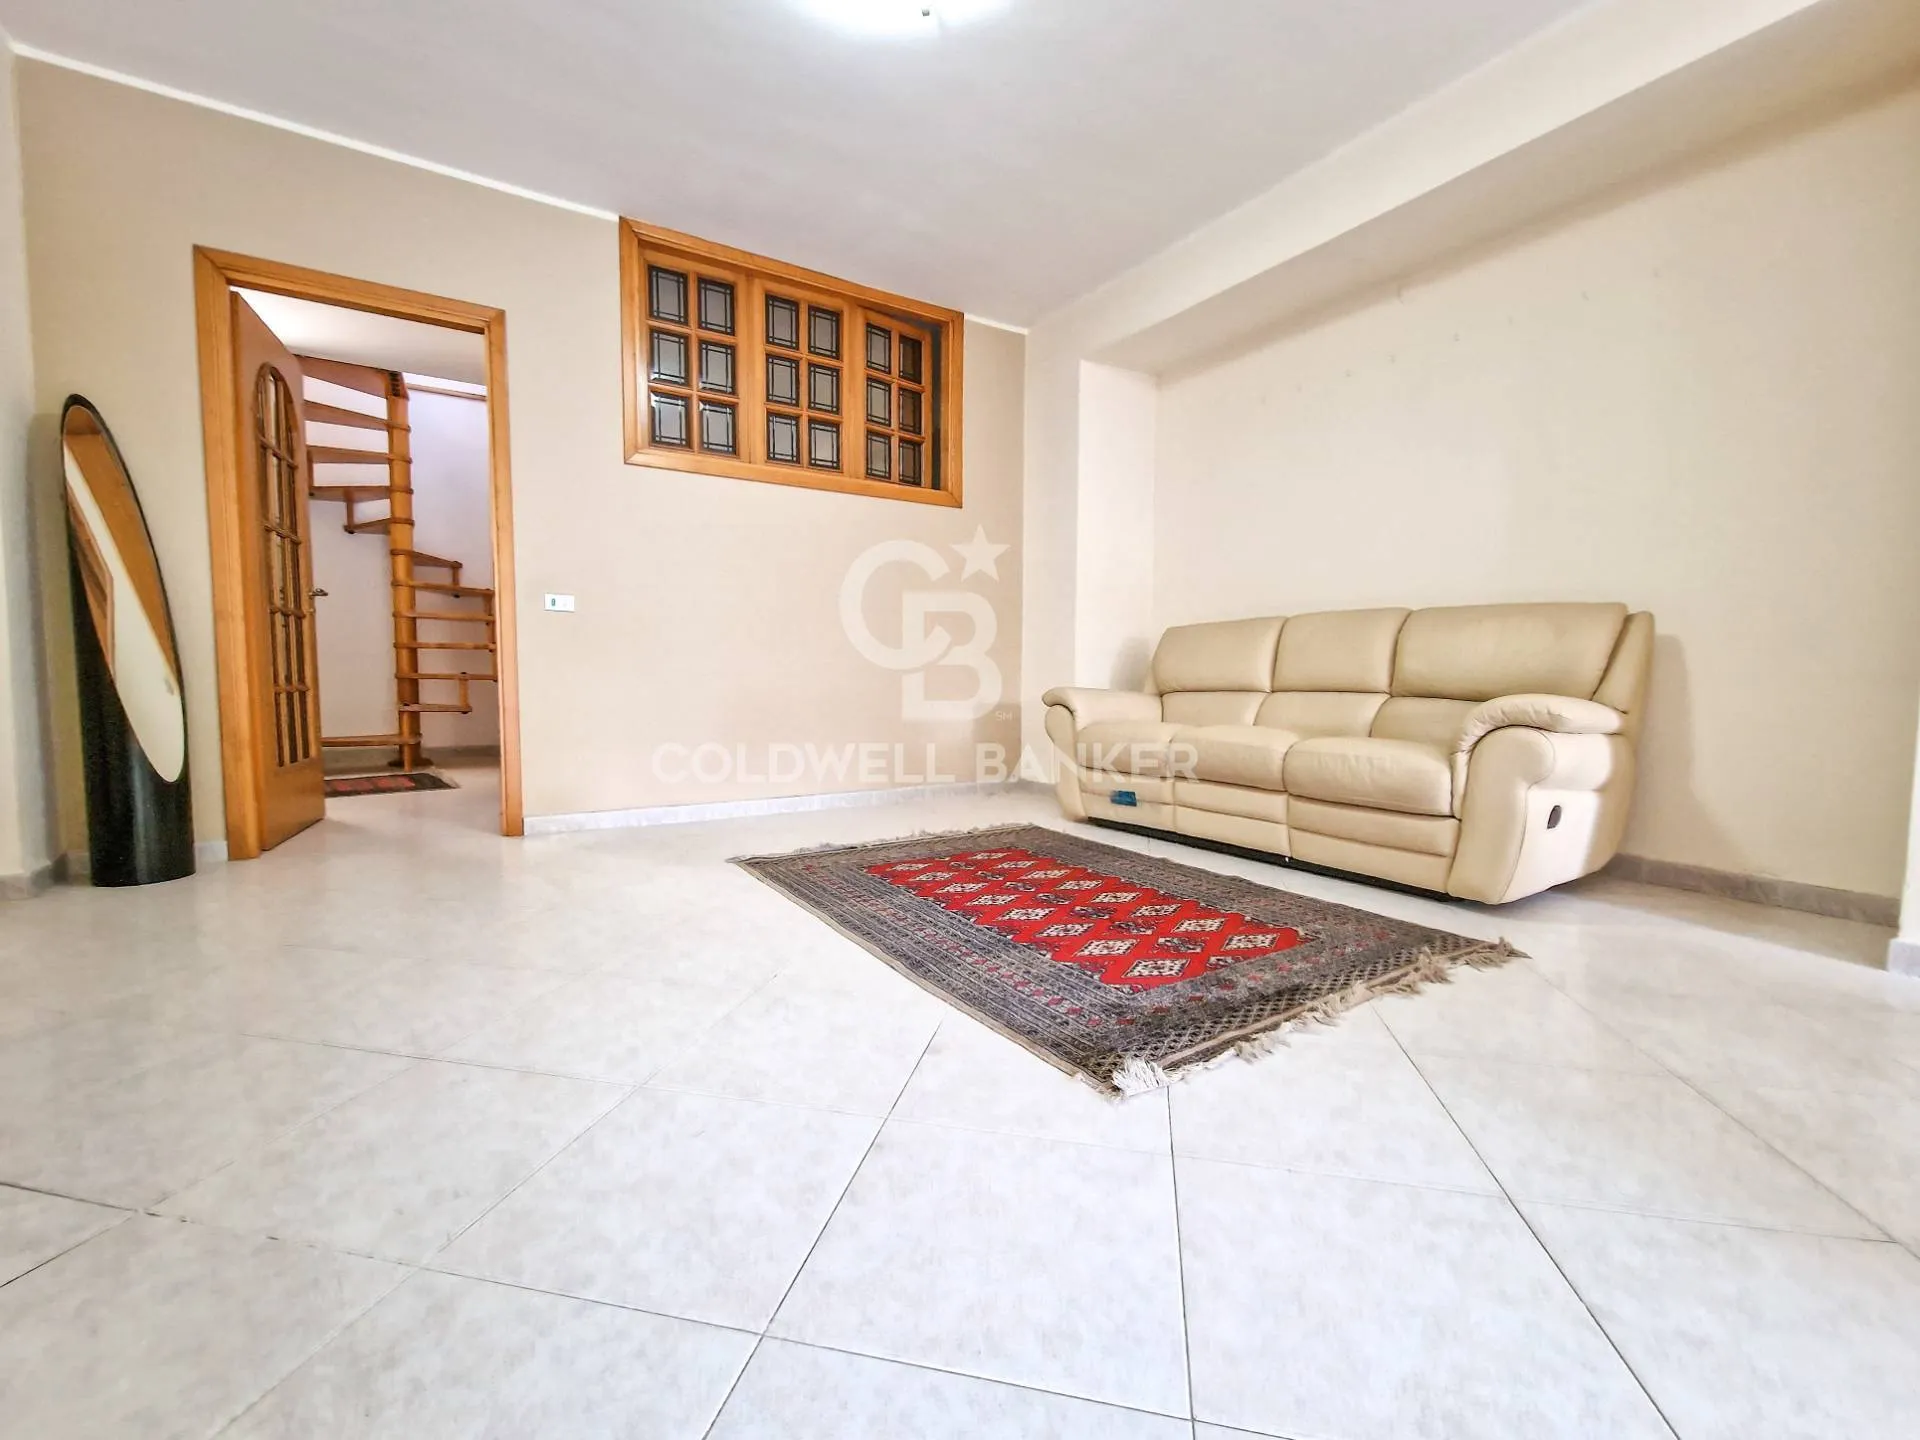 Immagine per Villa in vendita a Pedara via m. gaudioso